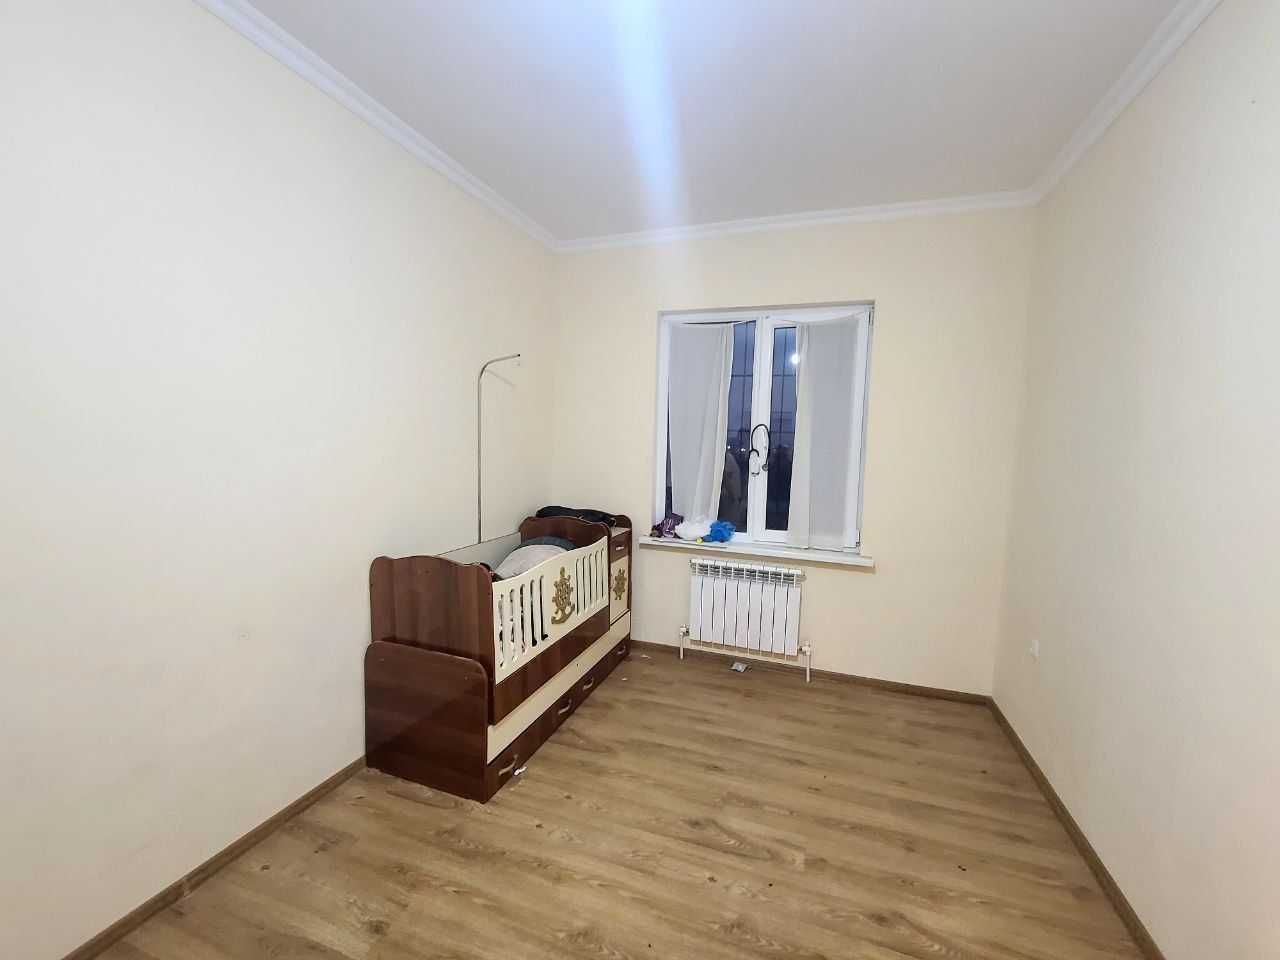 Мотрид Корасувда 7-етажда 3-хоналик квартира сотилади  90м2